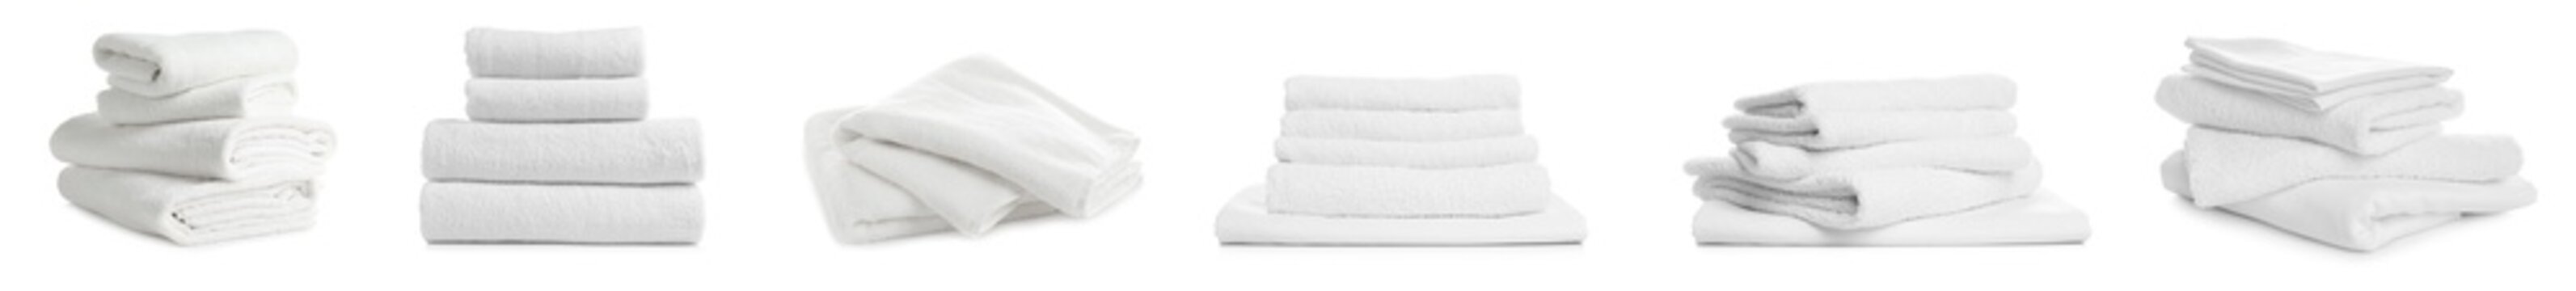 Set of folded towels on white background. Banner design